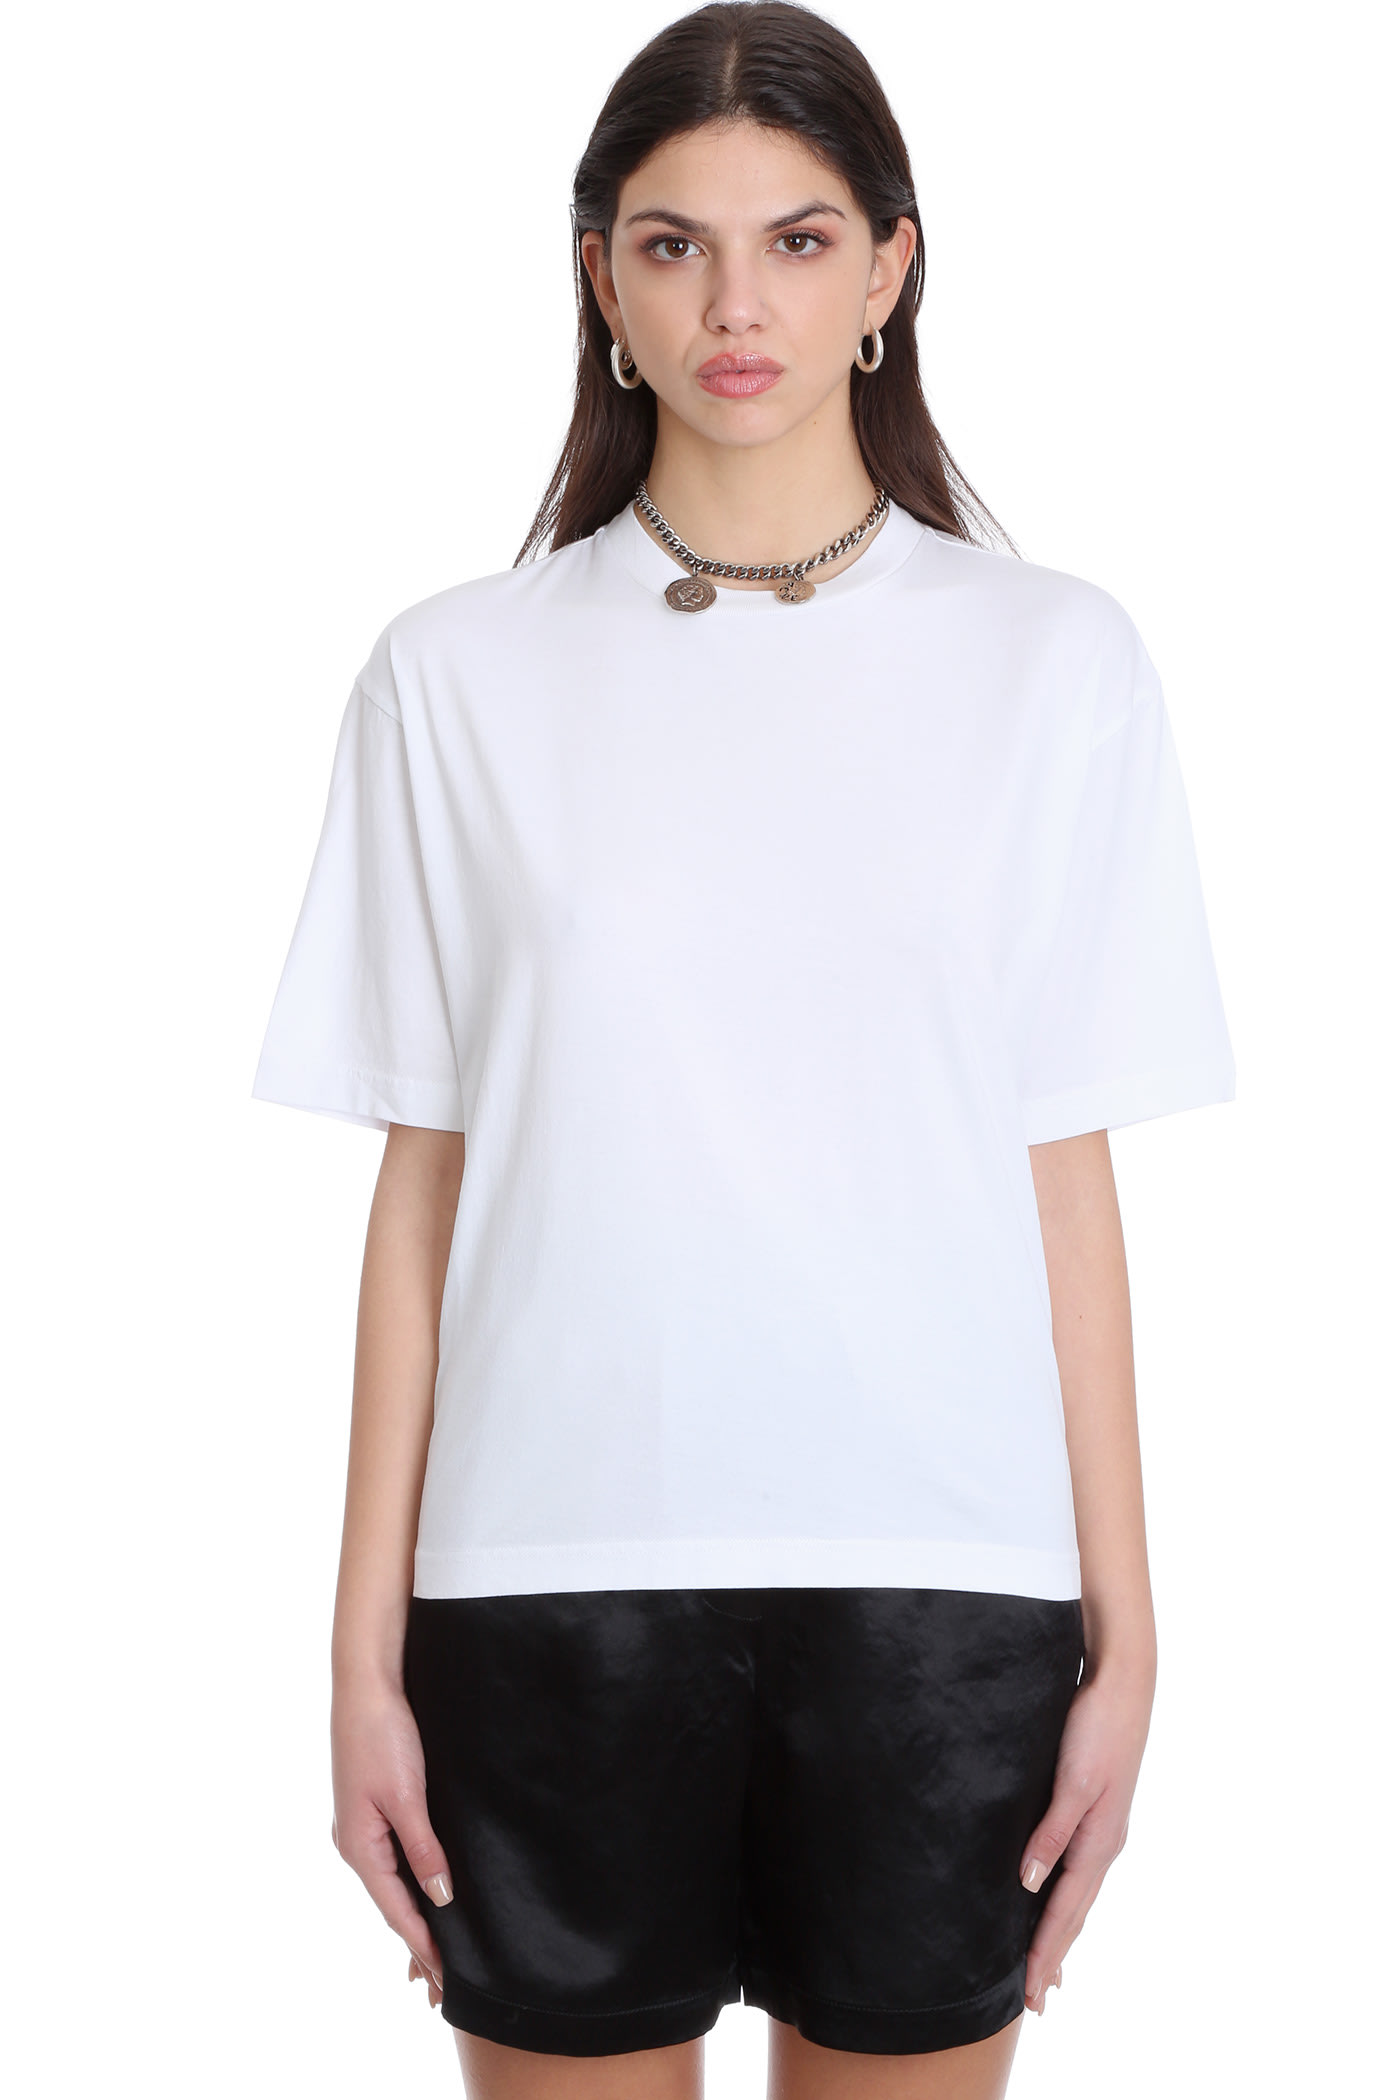 Acne Studios Edie T-shirt In White Cotton